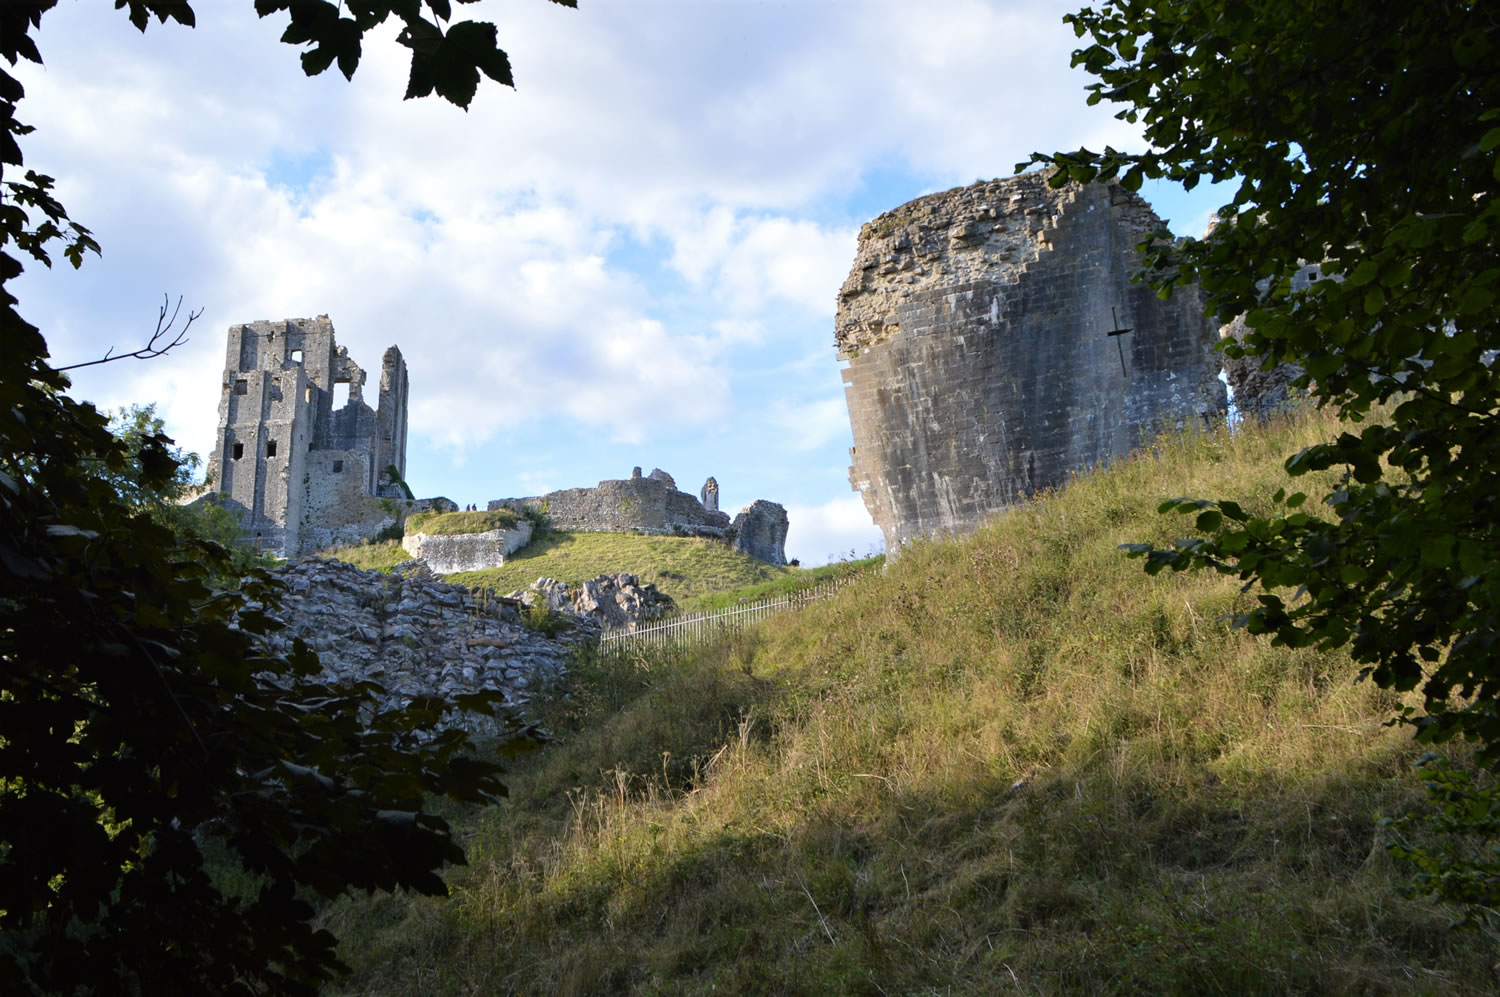 Corfe Castle ruins. Image Copyright N.Thorne 2020